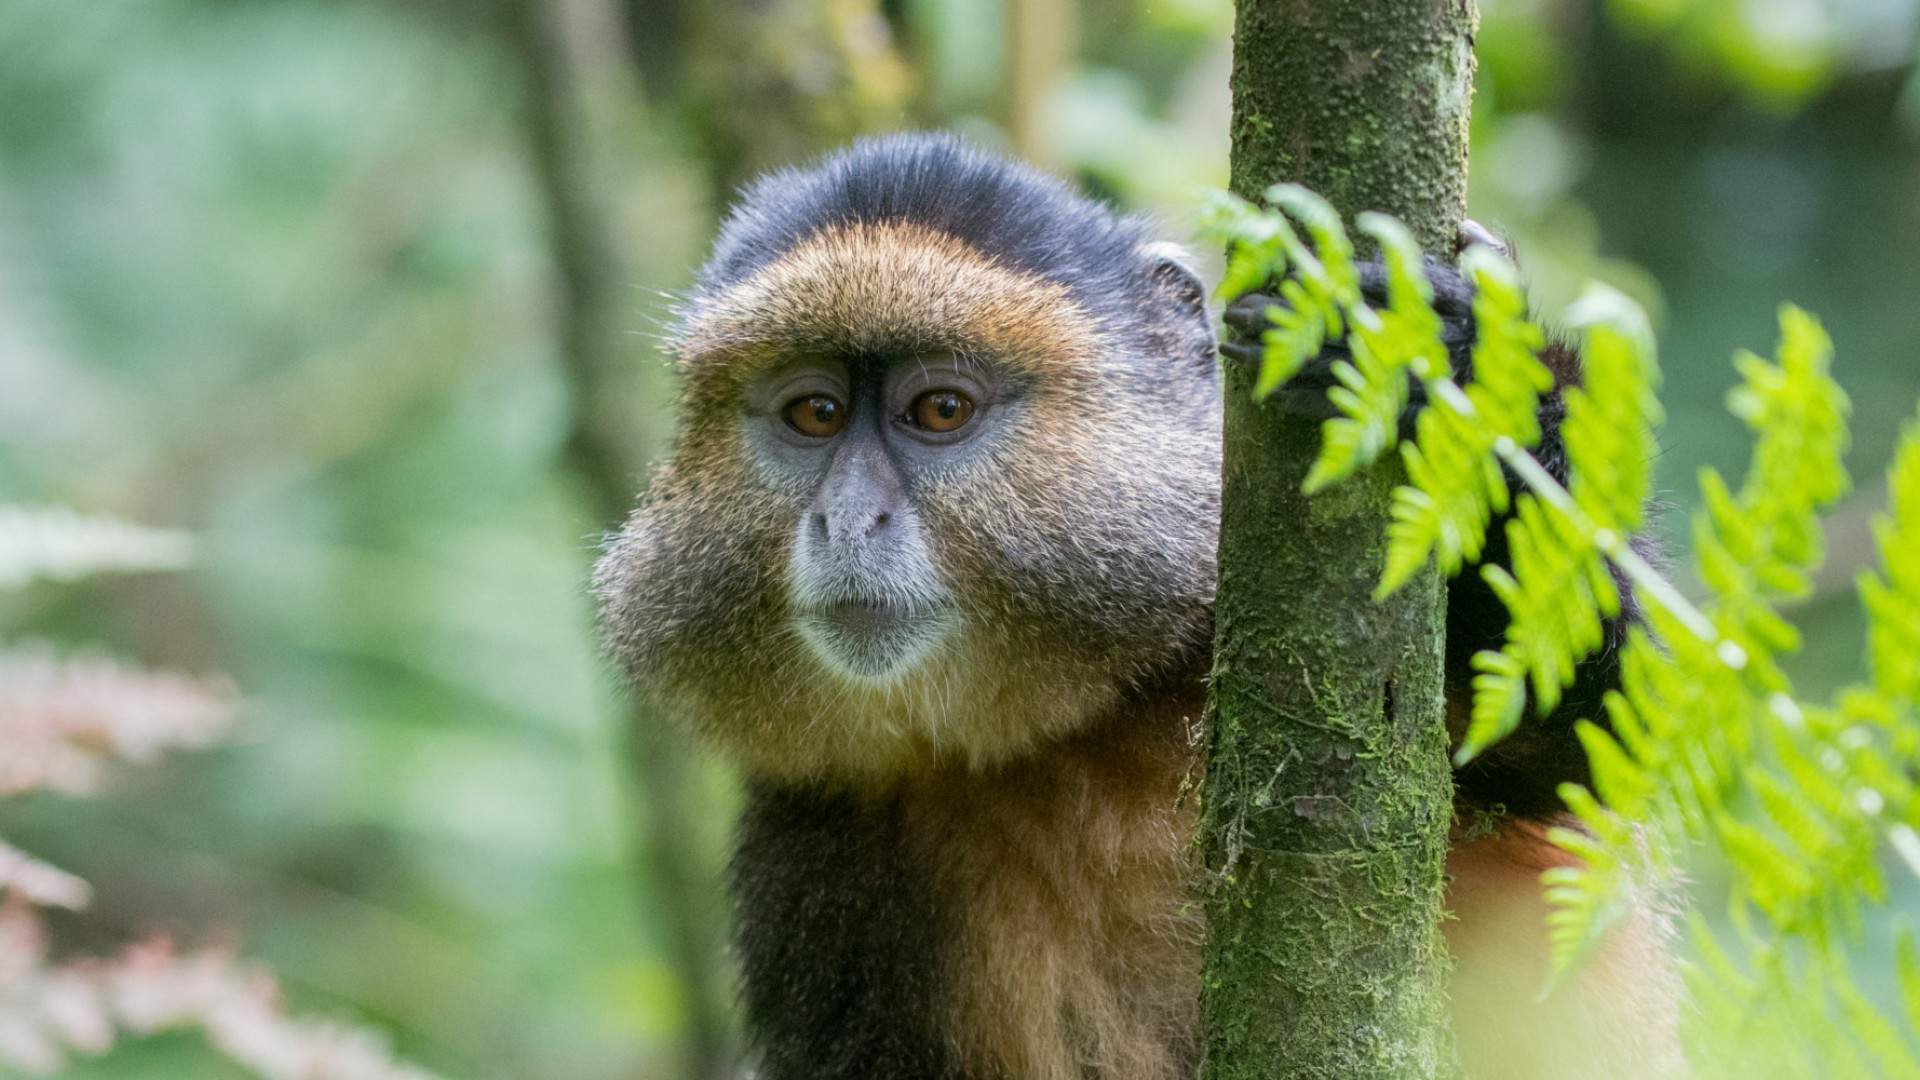 Up close of a golden monkey sitting in a tree in Rwanda